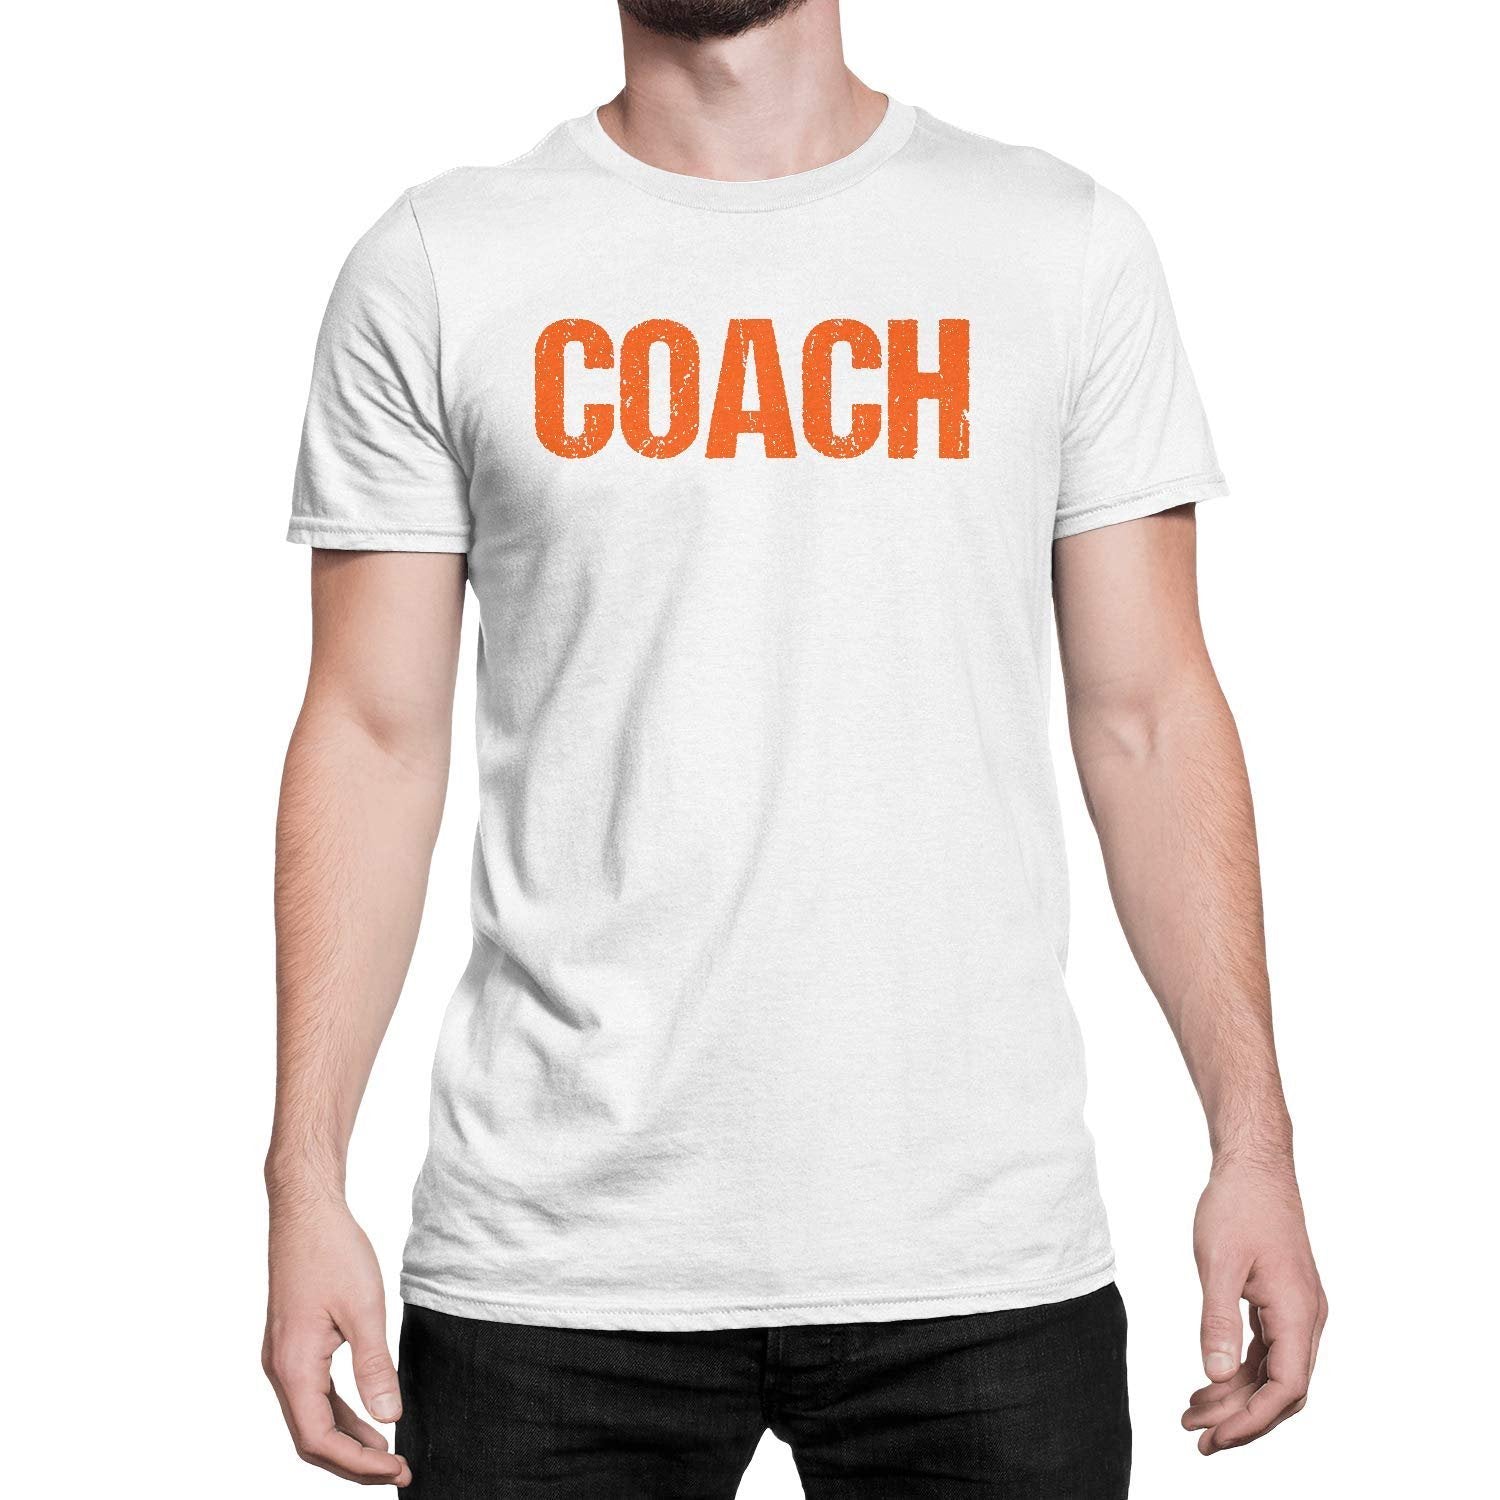 Coach T-Shirt Sports Coaching Tee Shirt (White & Orange, Distressed)